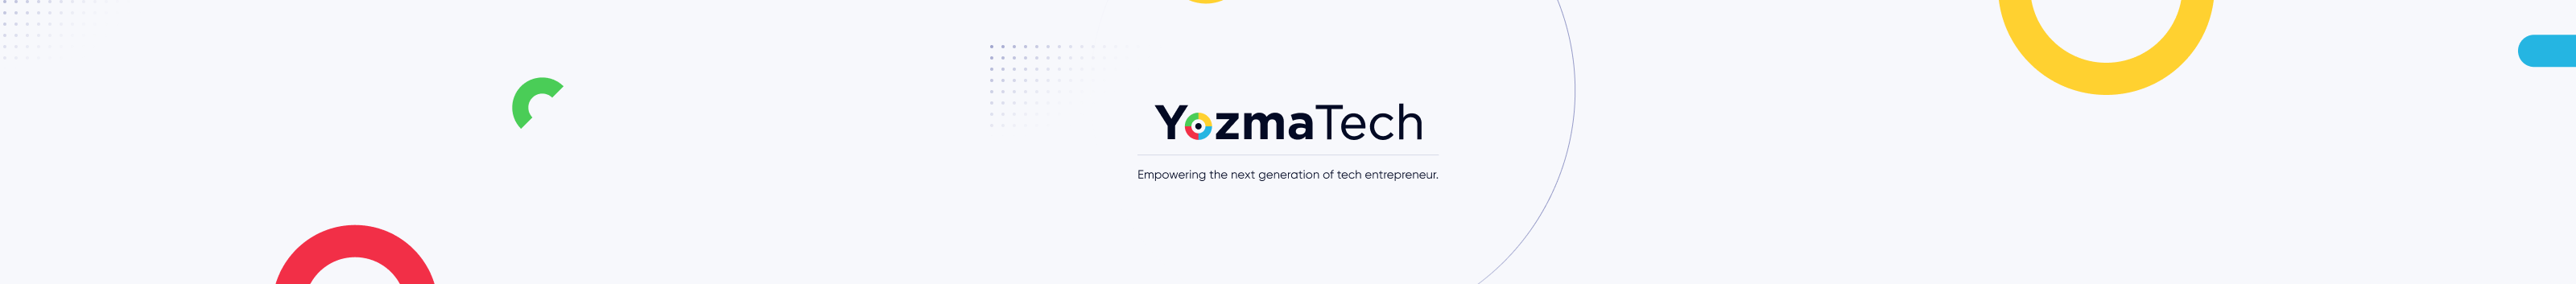 Yozma Tech's profile banner